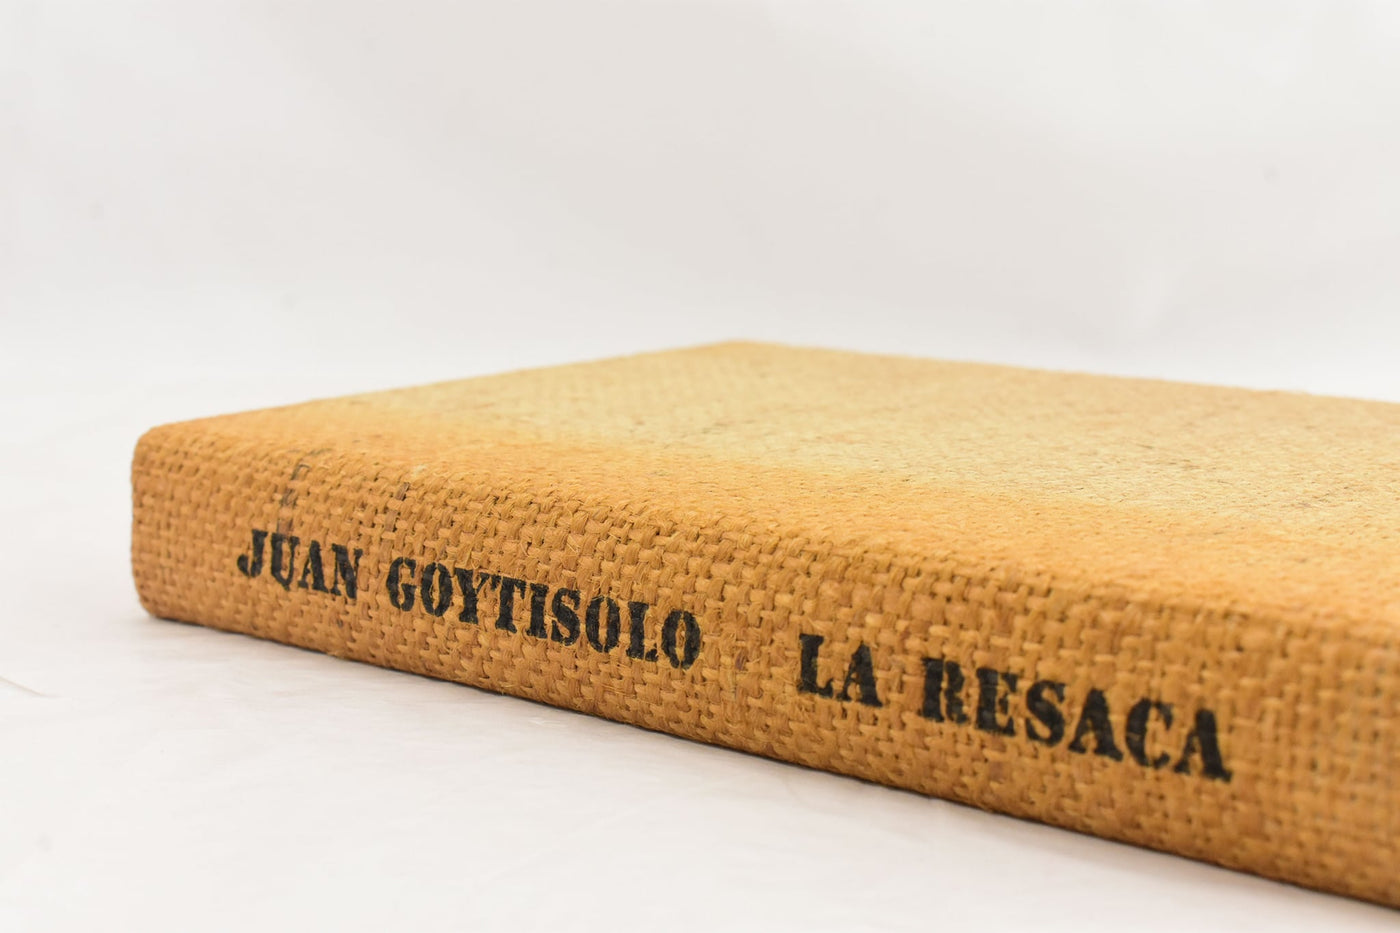 LA RESACA - Juan Goytisolo